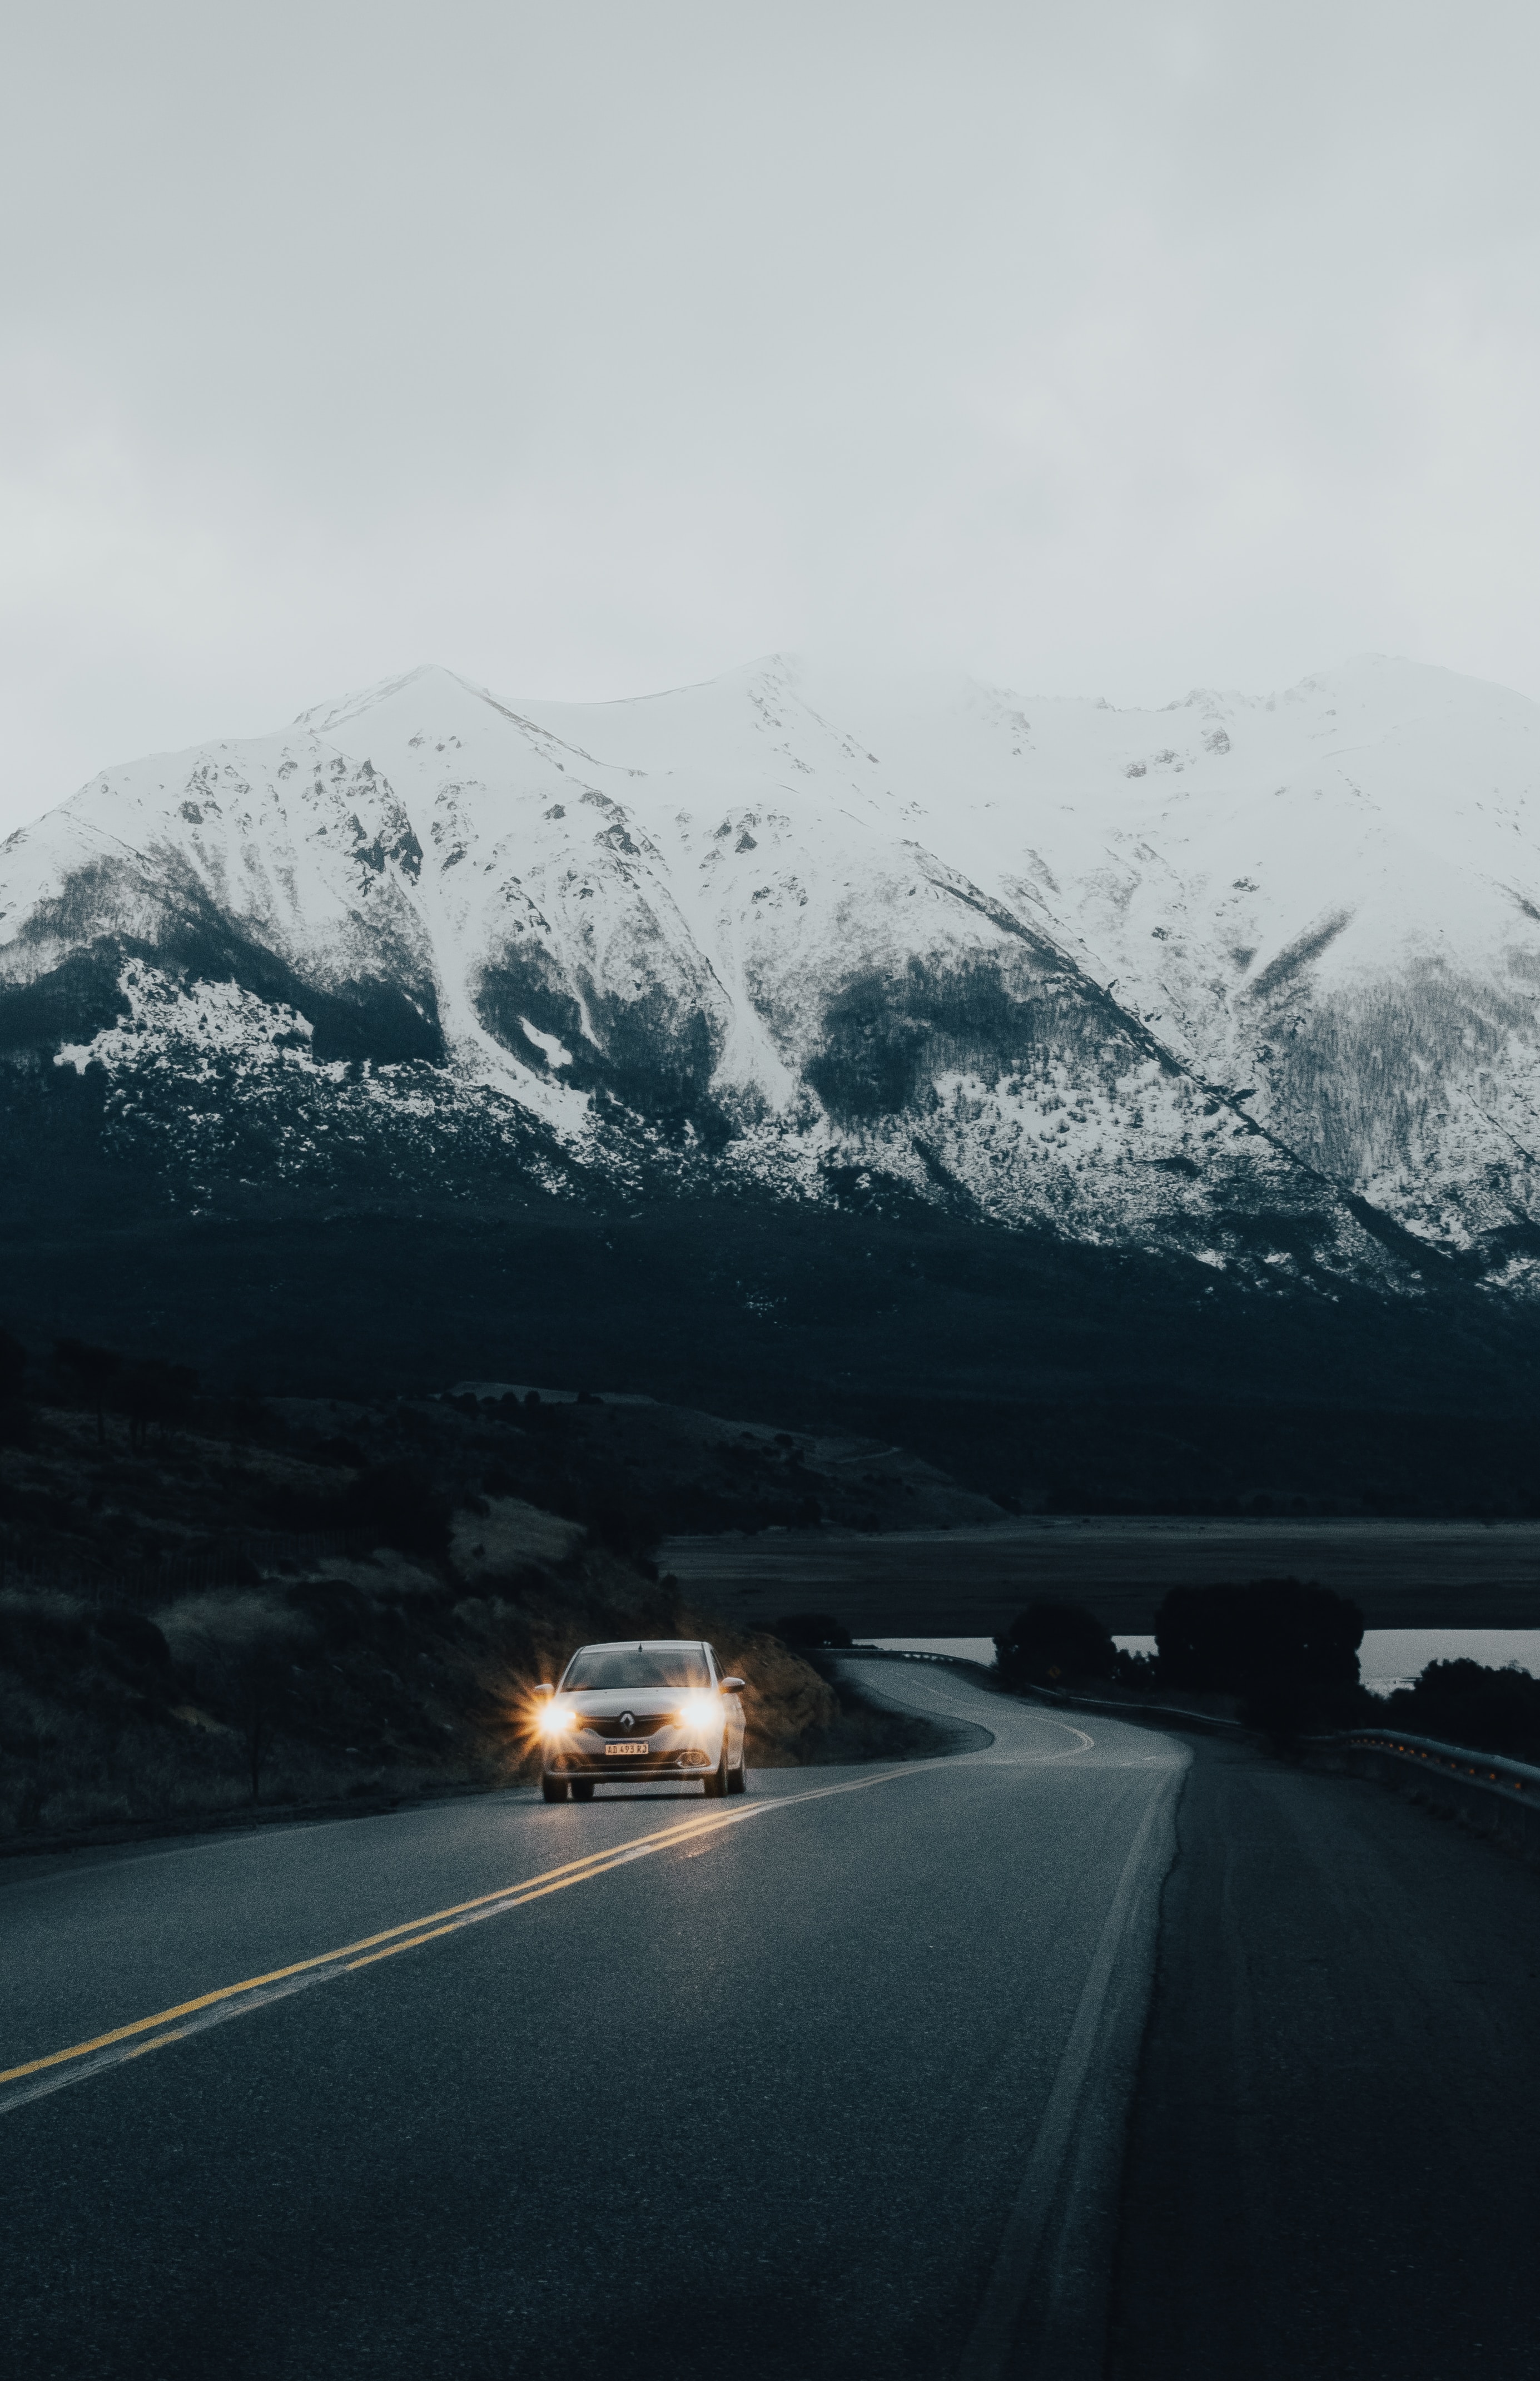 129118 descargar imagen naturaleza, montaña, camino, un coche, máquina, cubierto de nieve, nevado: fondos de pantalla y protectores de pantalla gratis